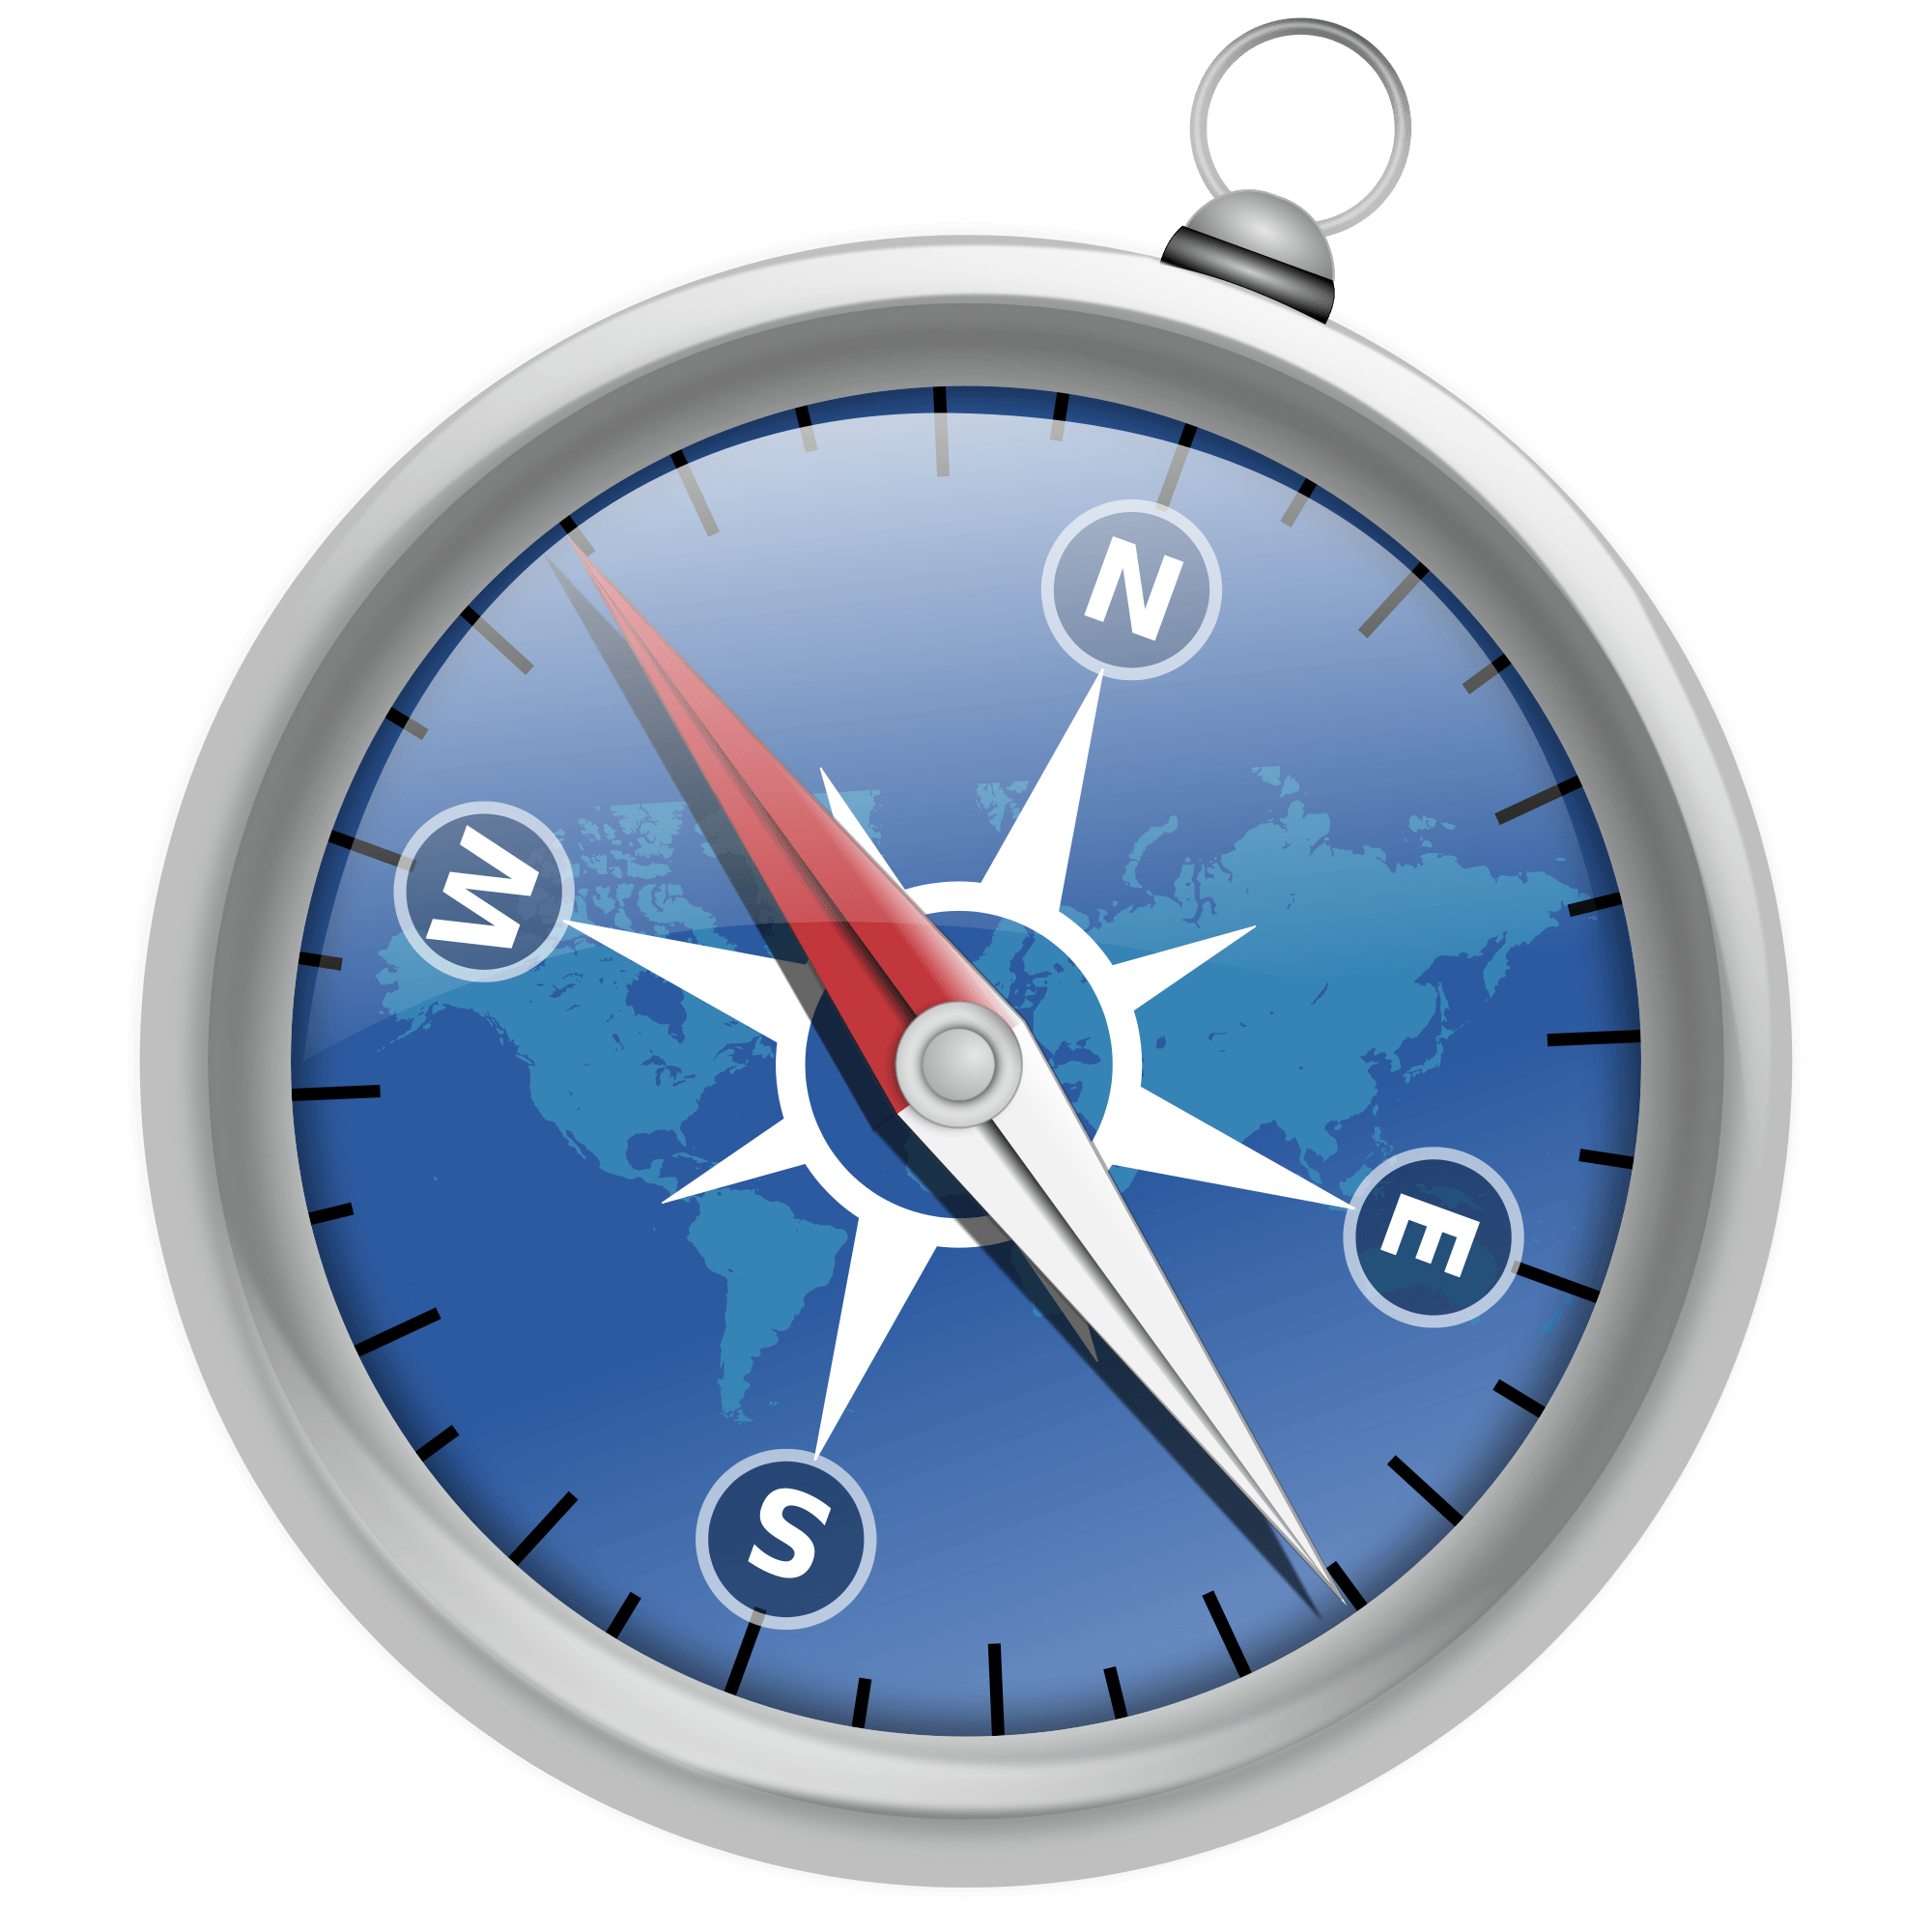 Safari Browser Logo - How To Activate Tabbed Browsing In Safari Web Browser